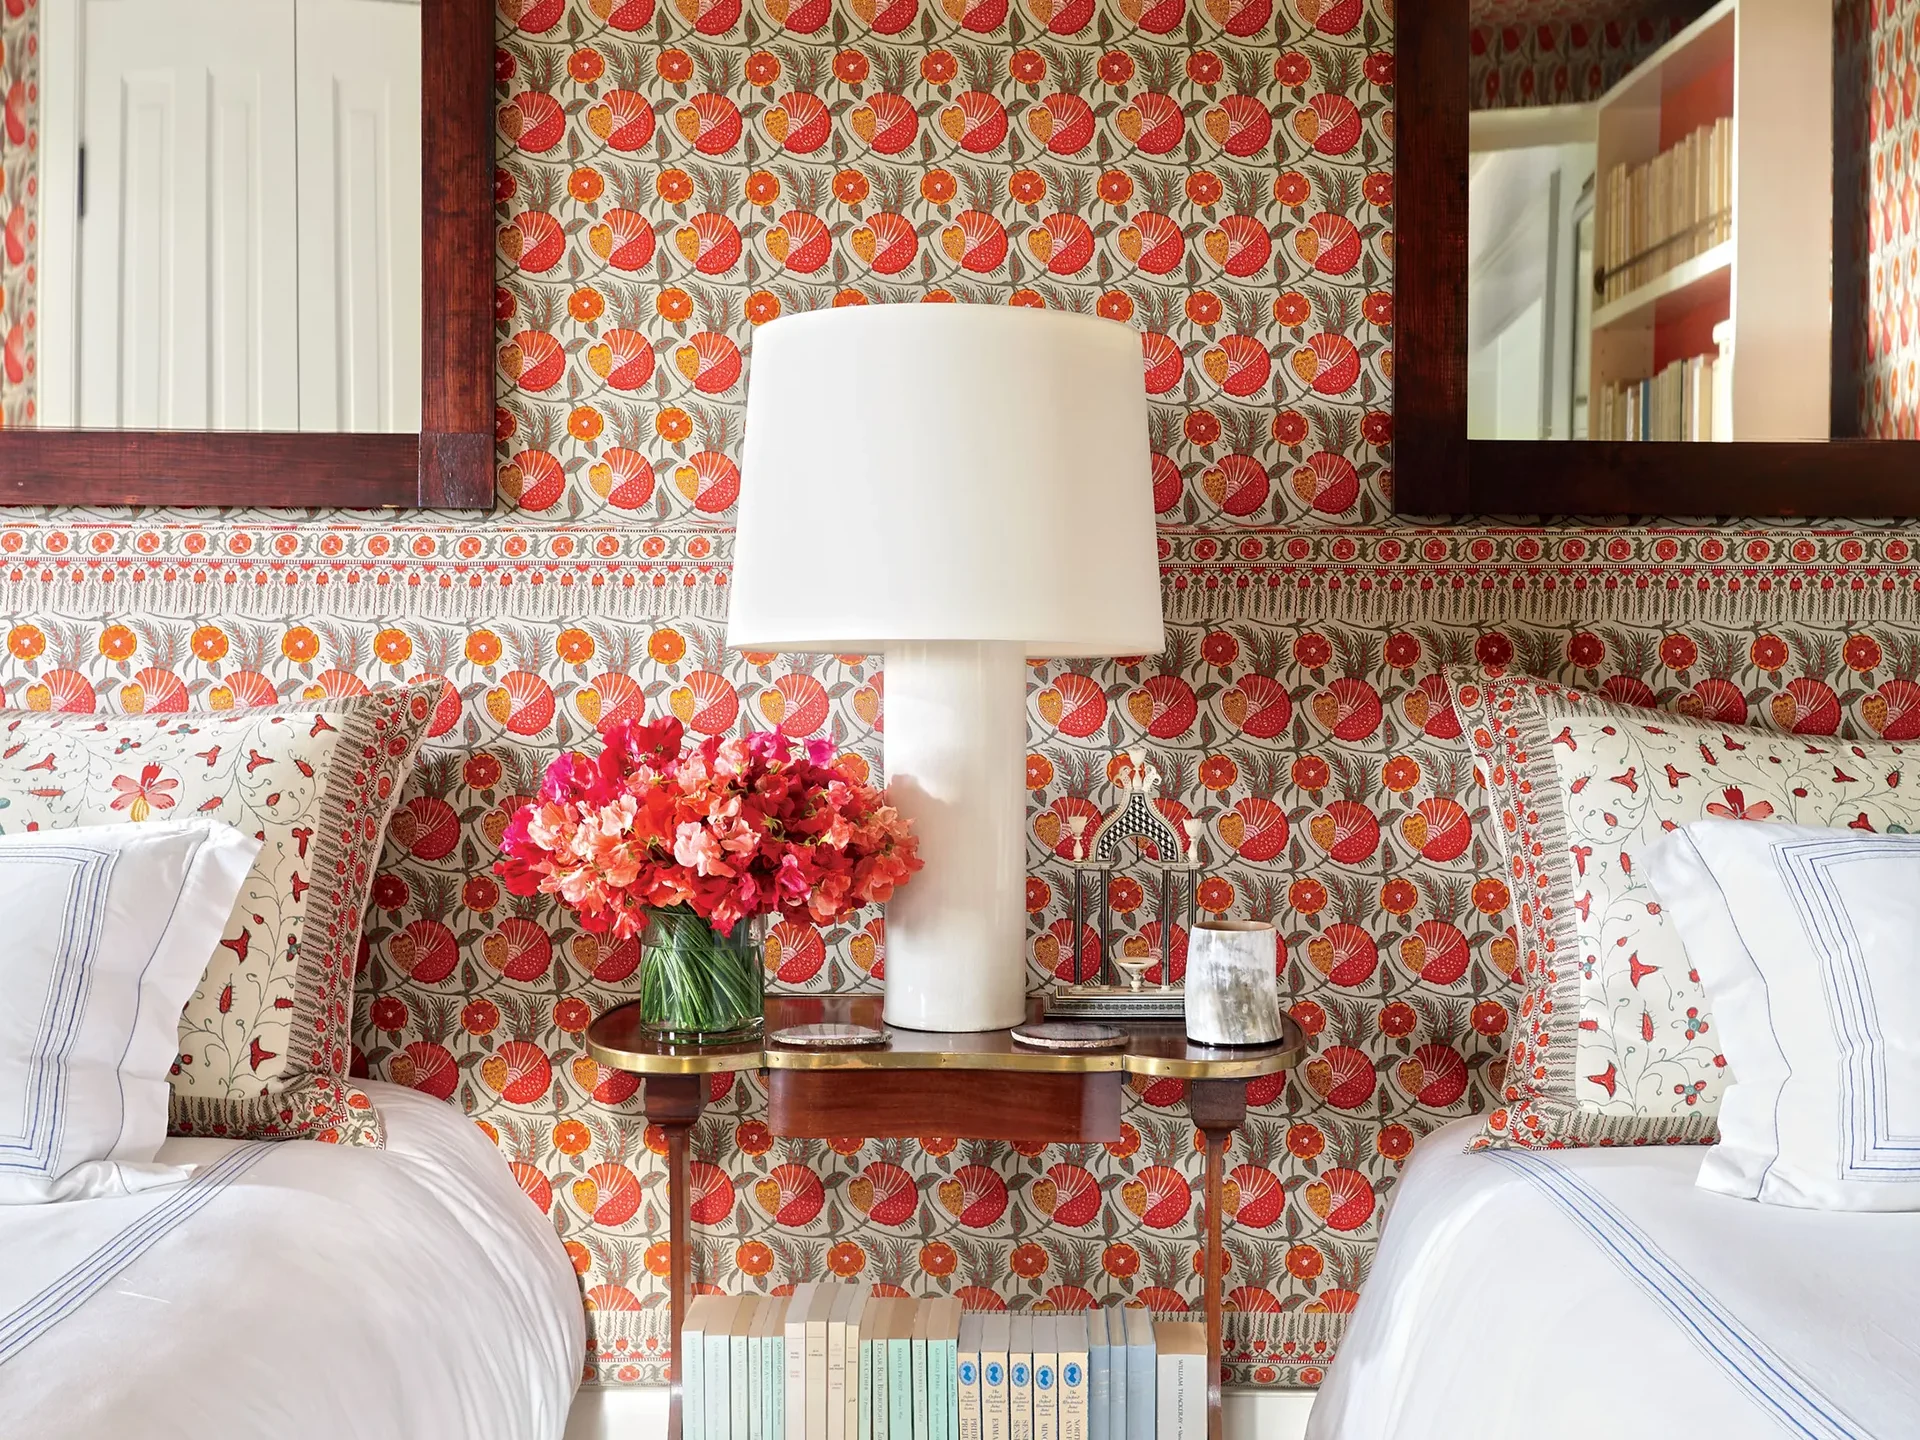 guest bedroom with flower wallpaper in red tones